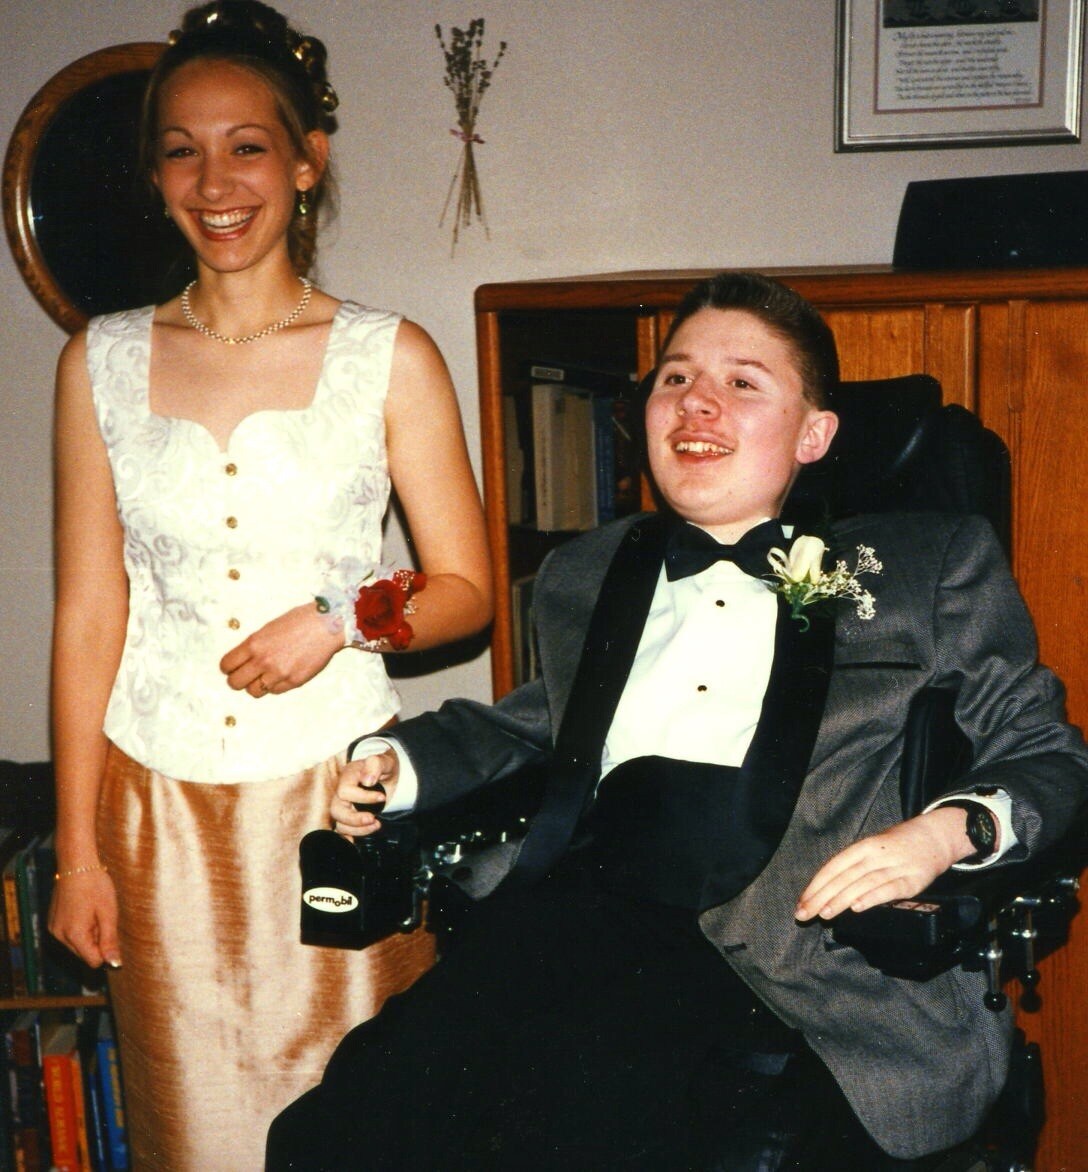 Ben and Angela, prom night, 1996.